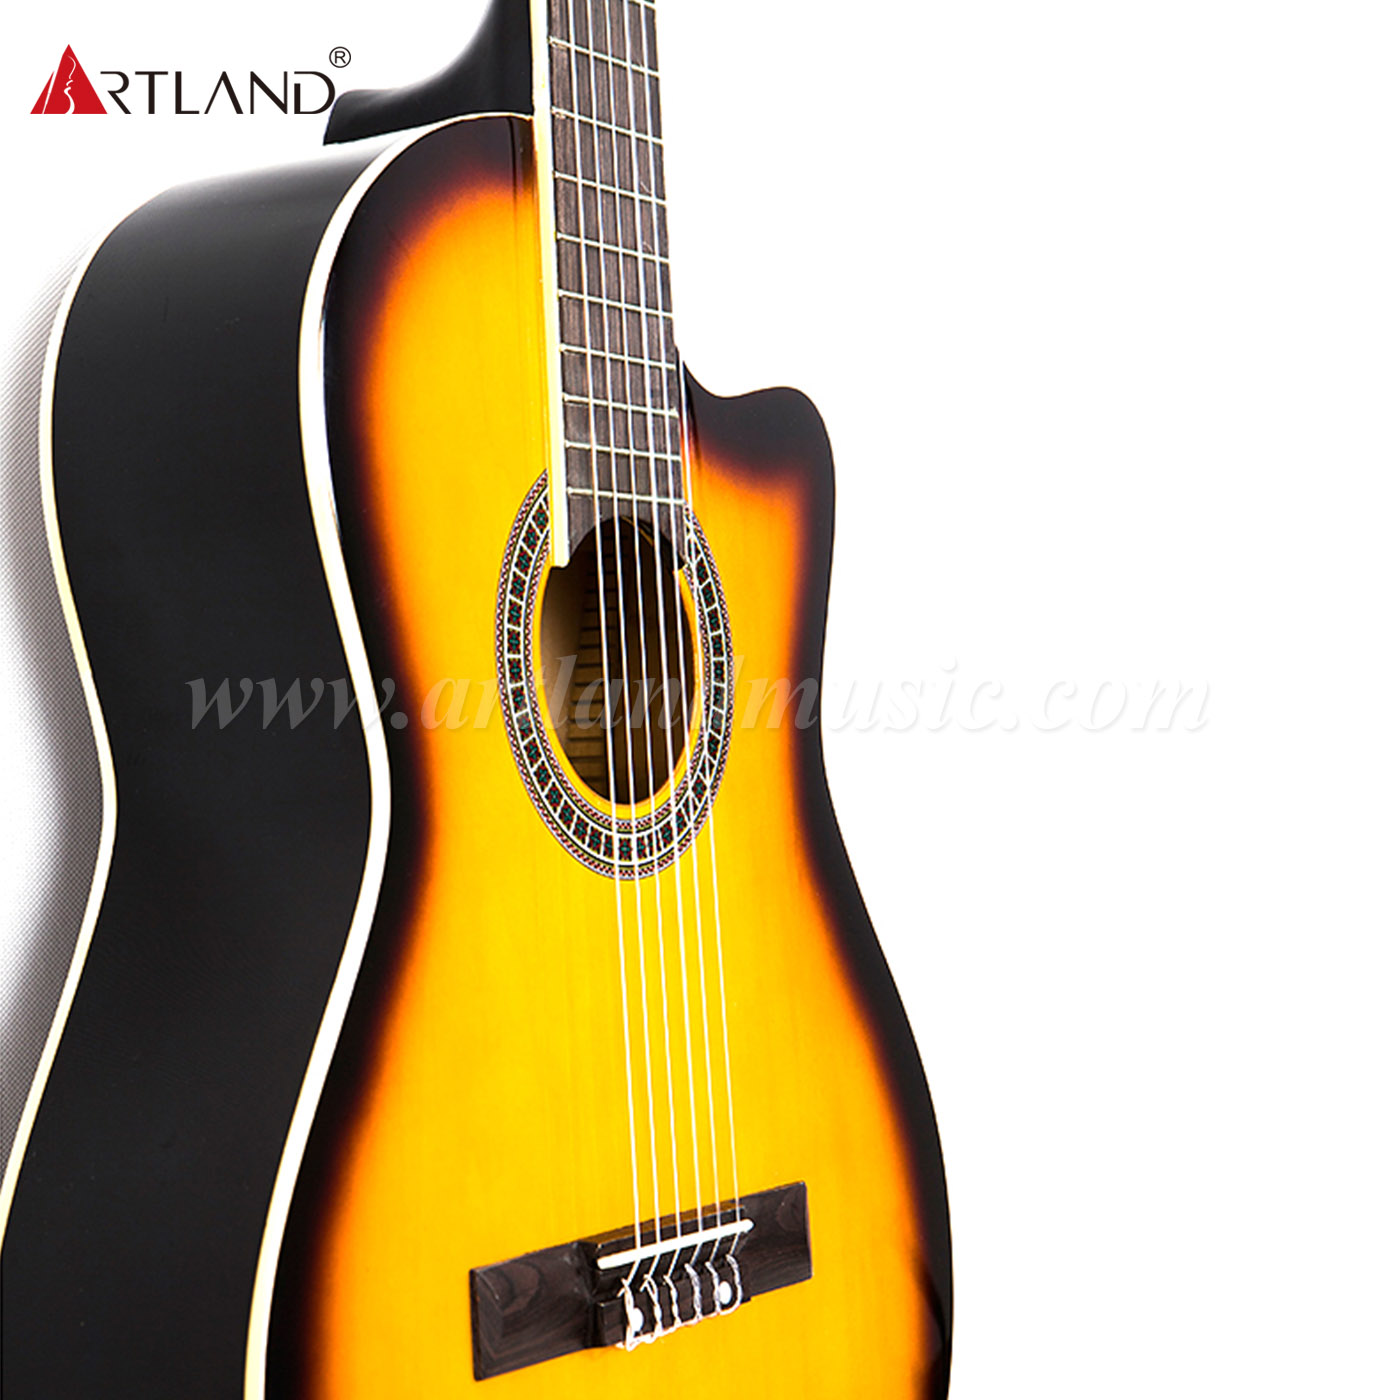 Sunburst Cutaway Body Classic Guitar (CG960)